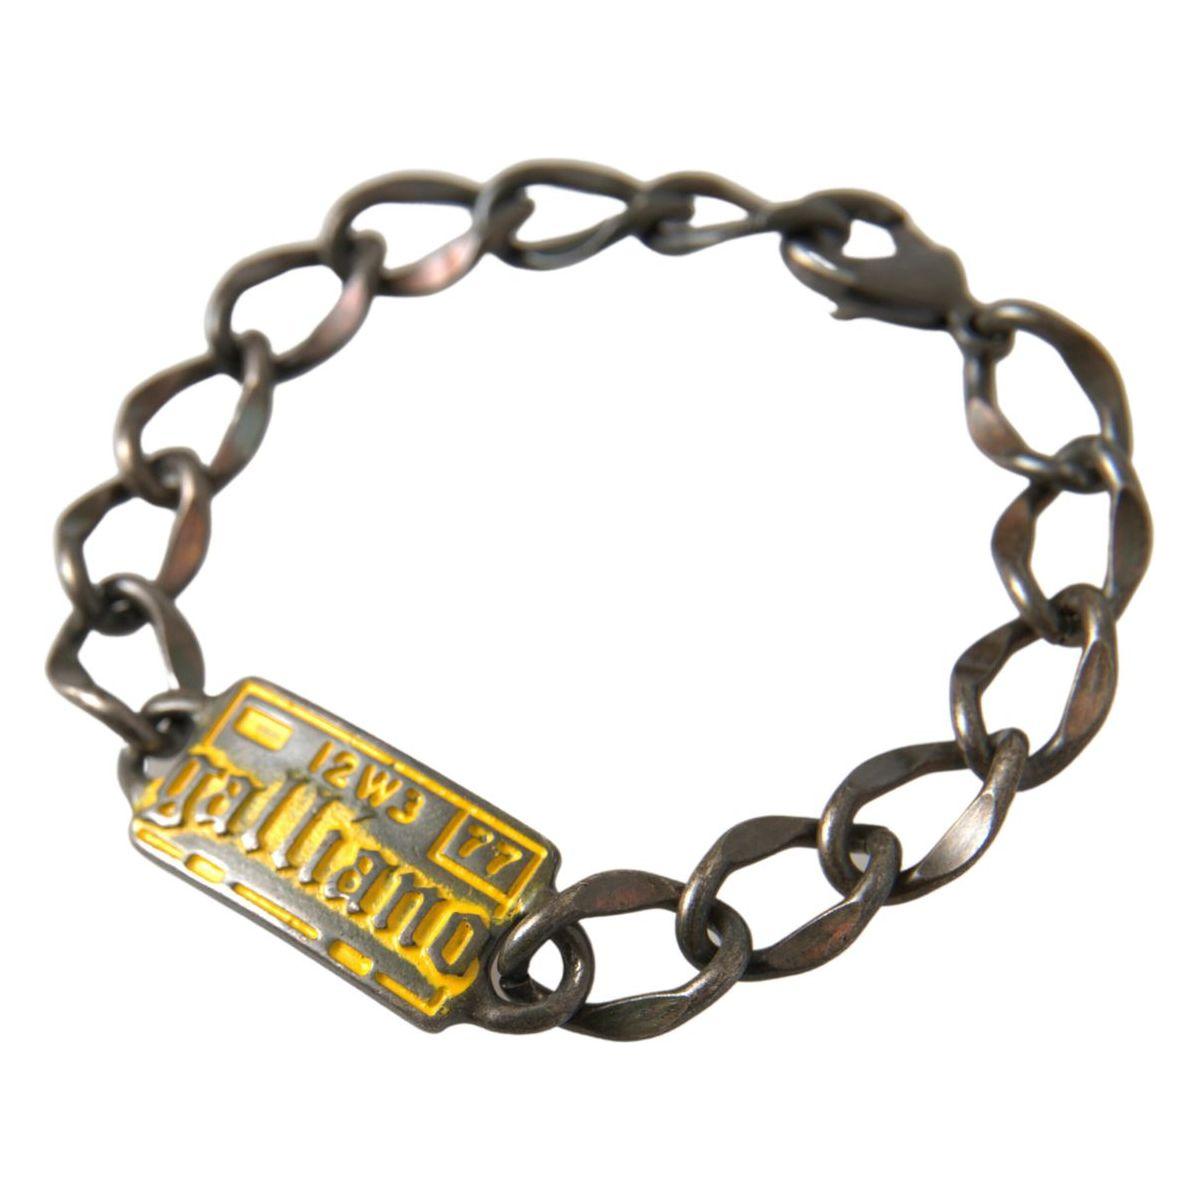 John Galliano Antique Silver Chain Link Bracelet for Women silver-tone-brass-chain-logo-plaque-branded-antique-bracelet 465A1285-scaled-71781eae-4a9.jpg